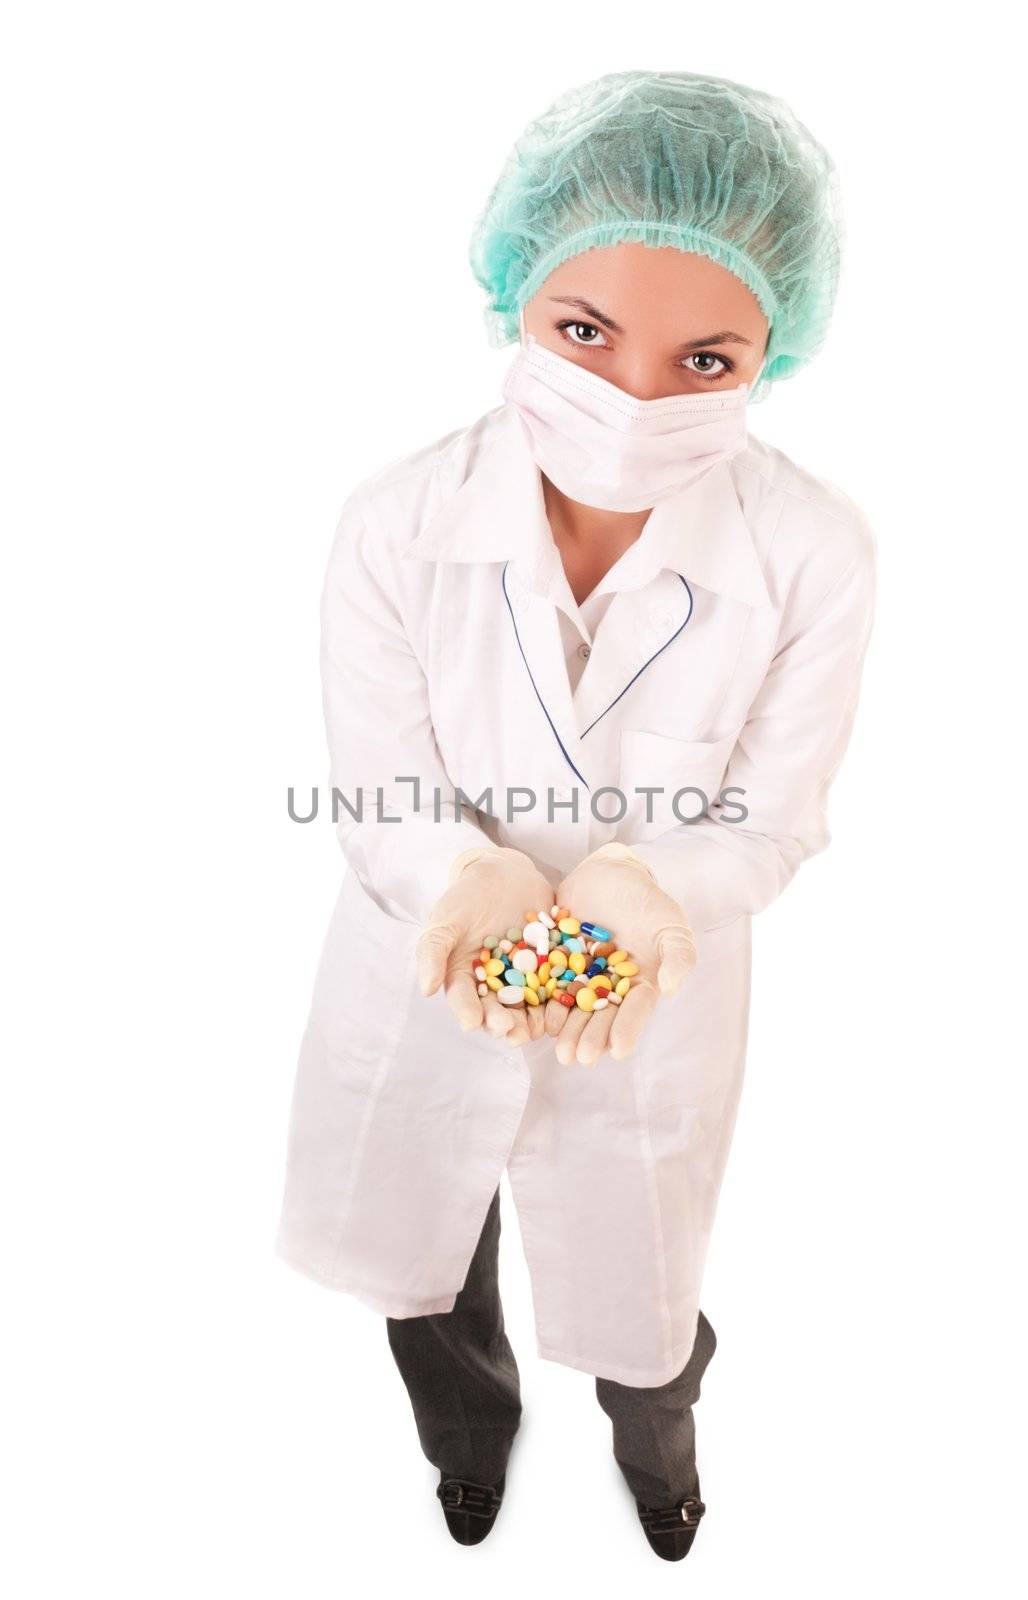 Serious doctor with pills by iryna_rasko